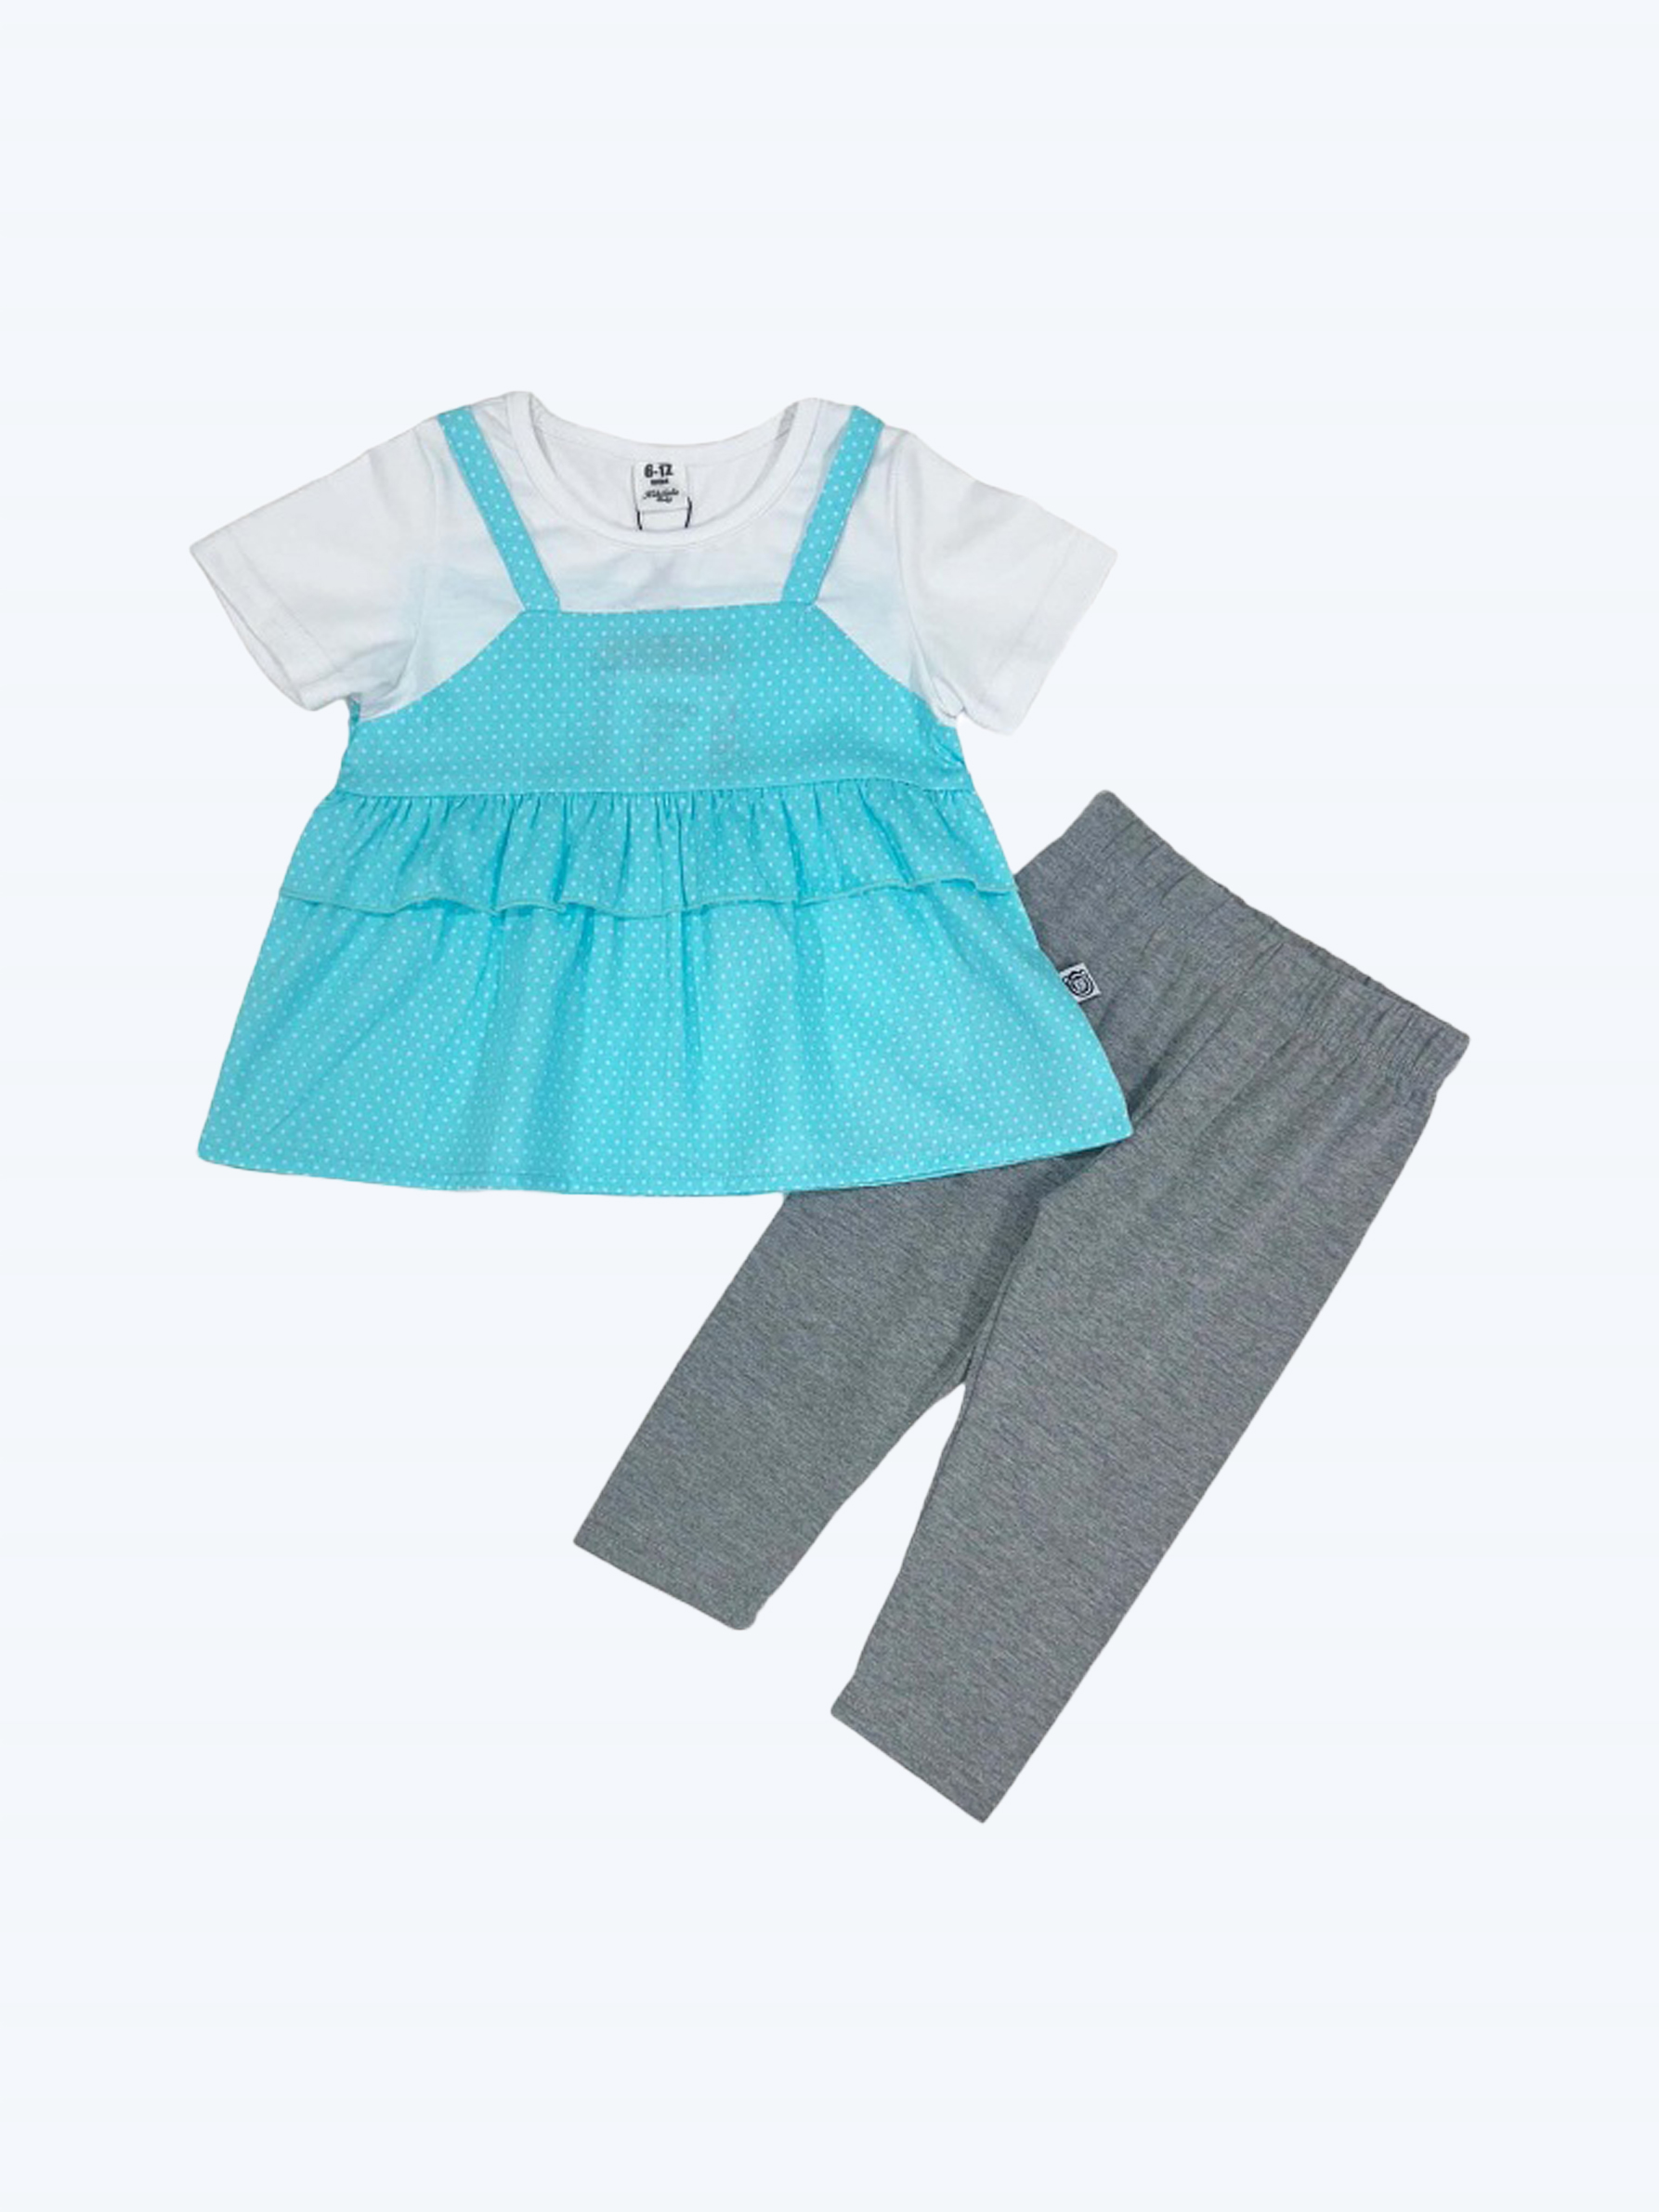 Kiklala Baby Fashion Girl Suit Set GSB340-KIKILALA